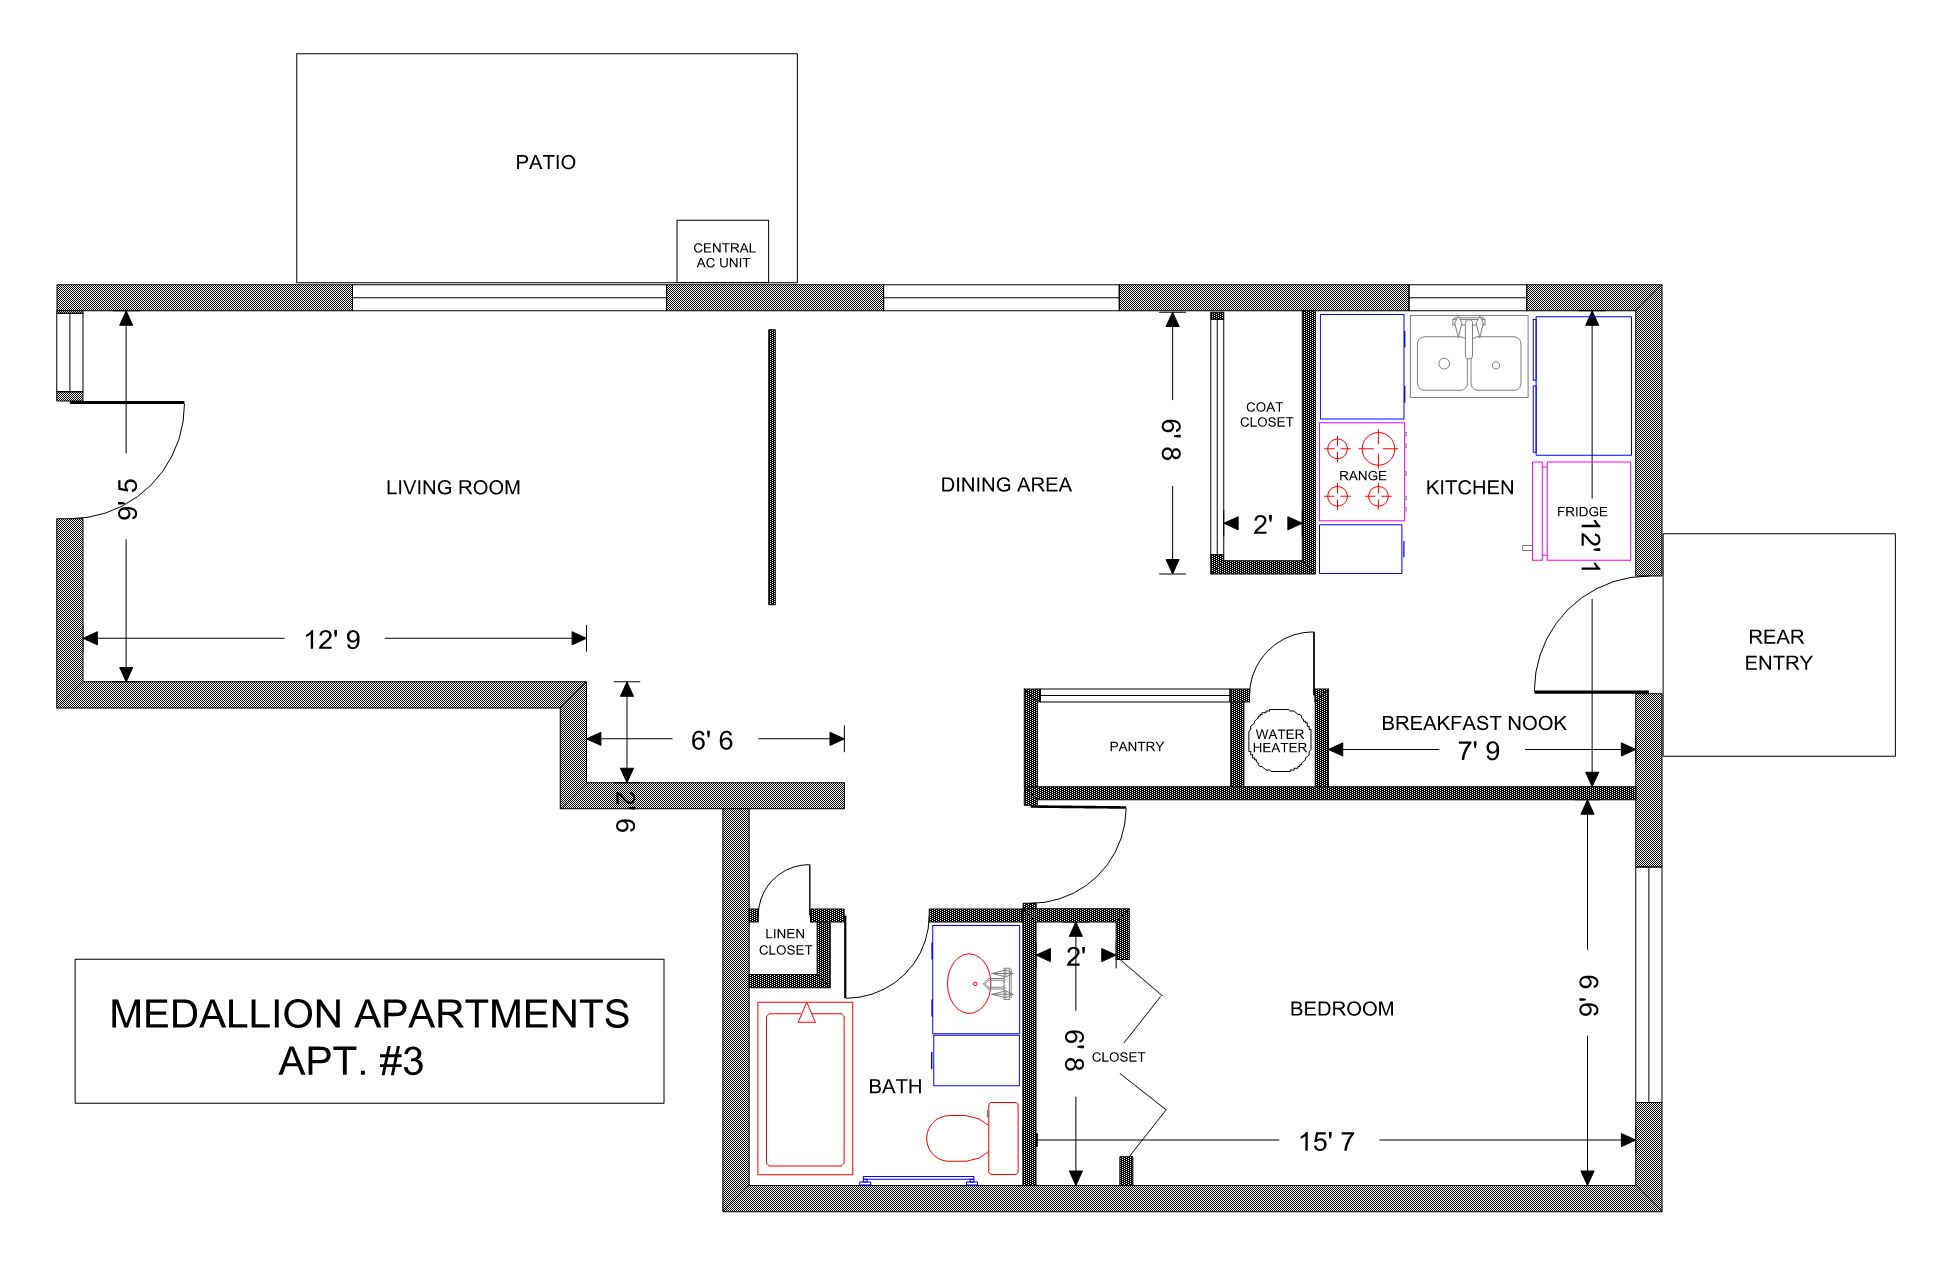 Medallion Apartments - Apt. #3 Floor Plan